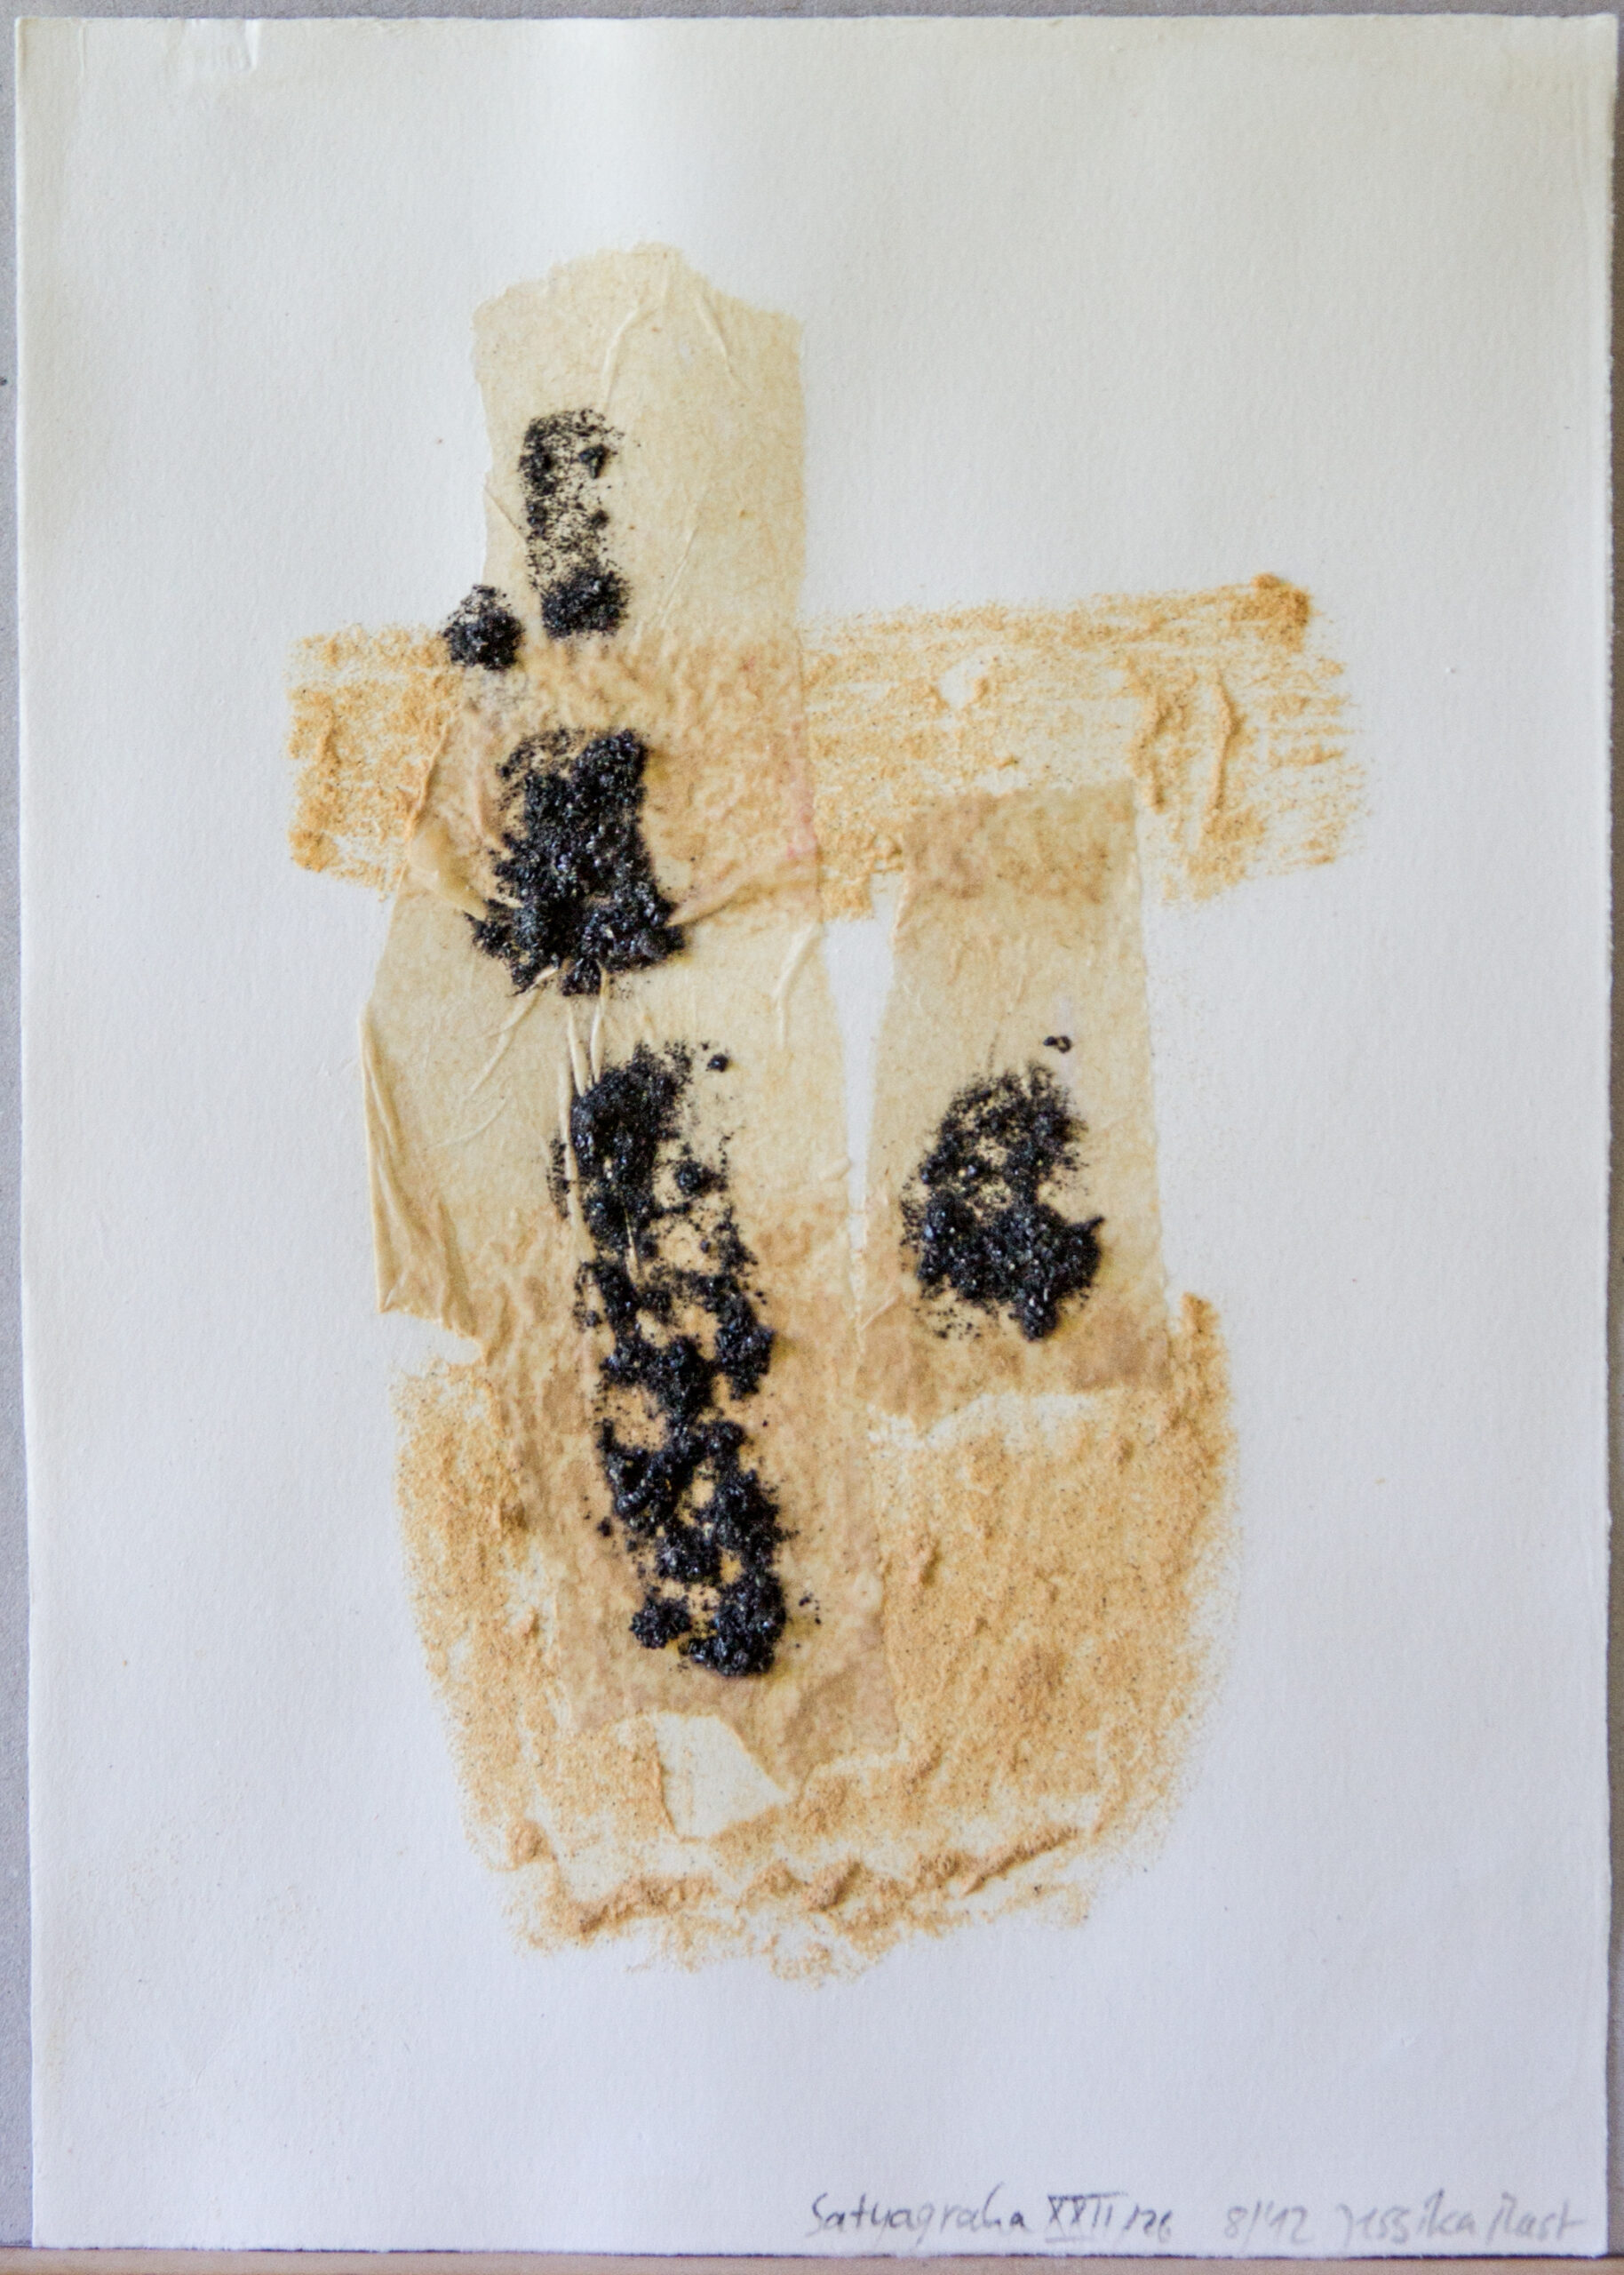 Satyagraha XXII: 26-teilige Serie,Gesteinsmehle, Kreide, Bleistift, Pigmente auf Papier,August 2012